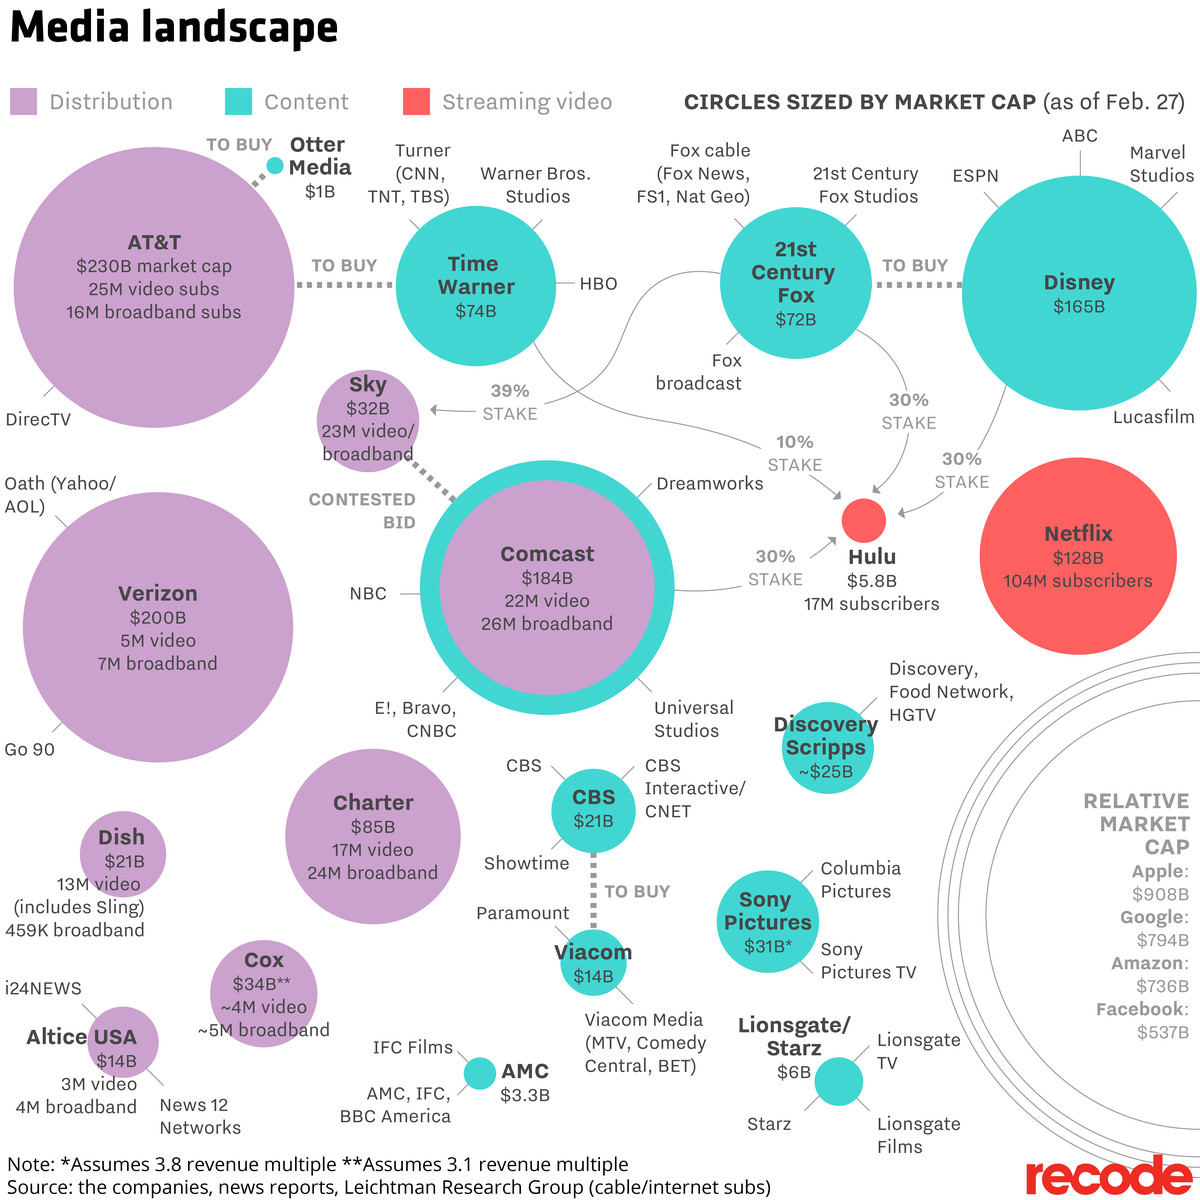 Media landscape, updated Feb. 27